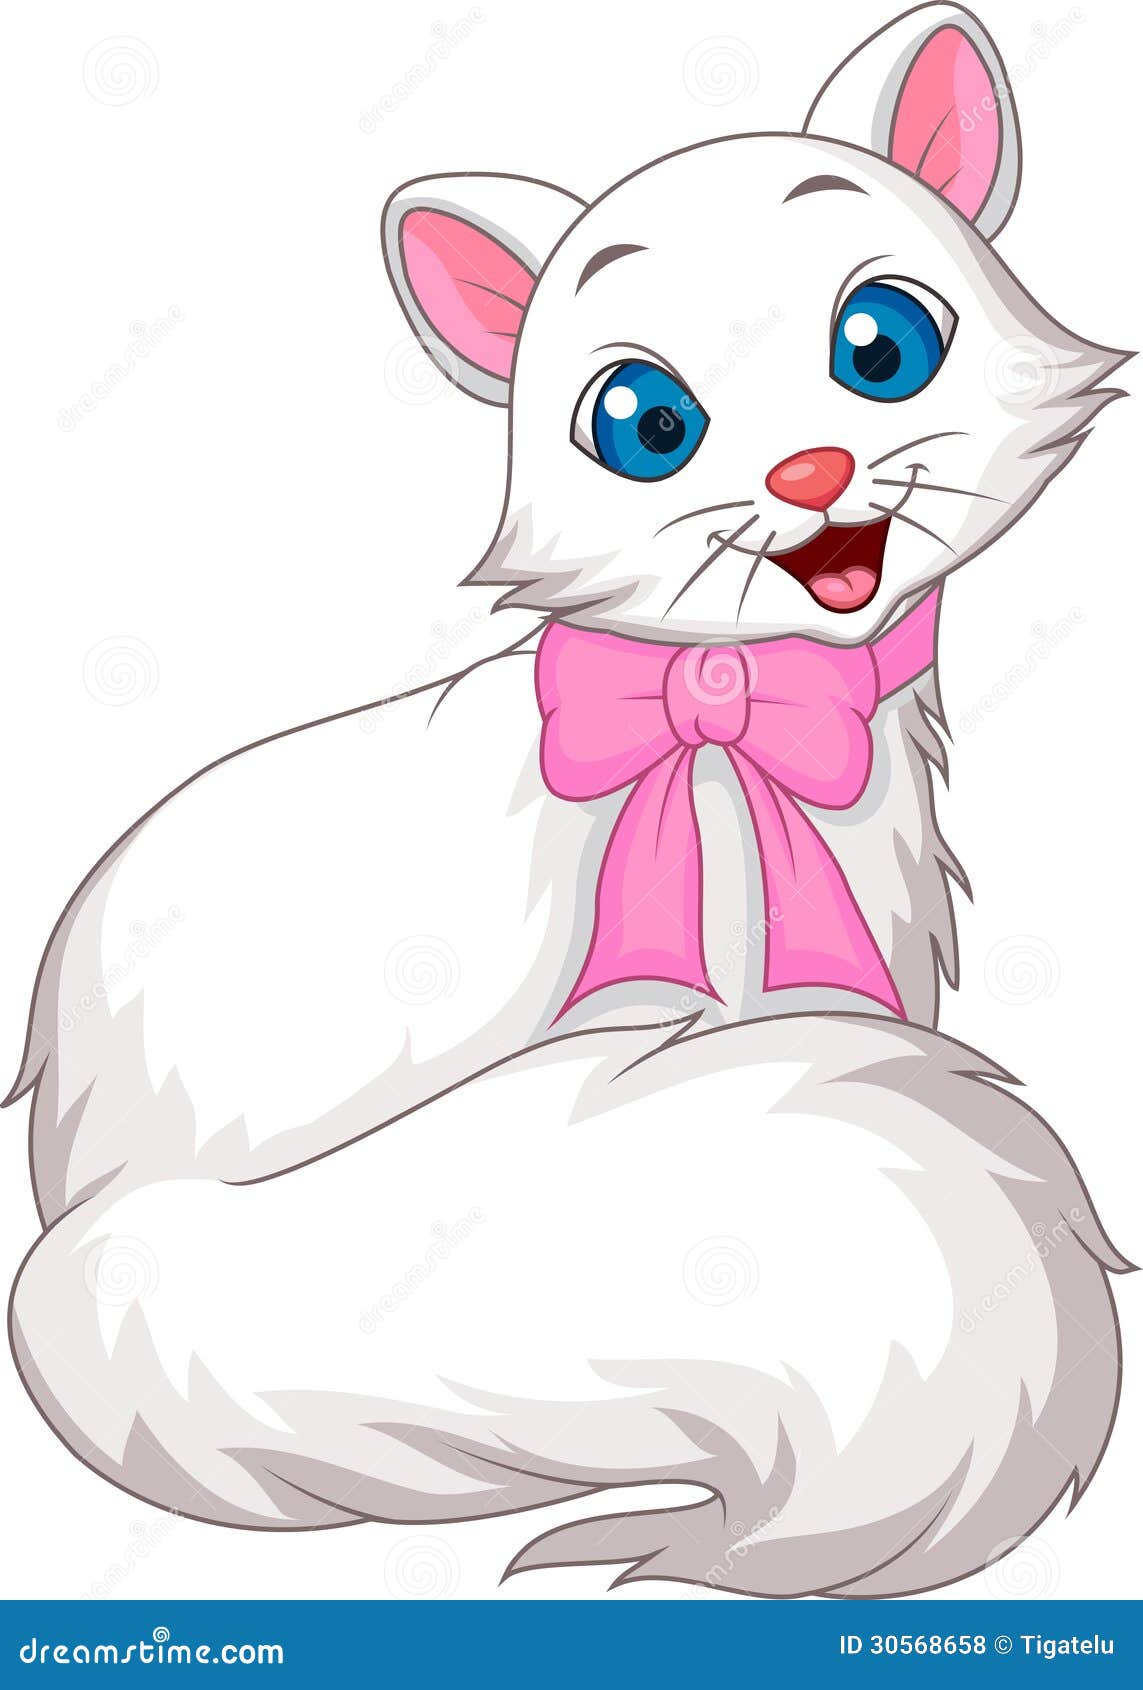 Cute white cat cartoon stock vector. Illustration of funny - 30568658